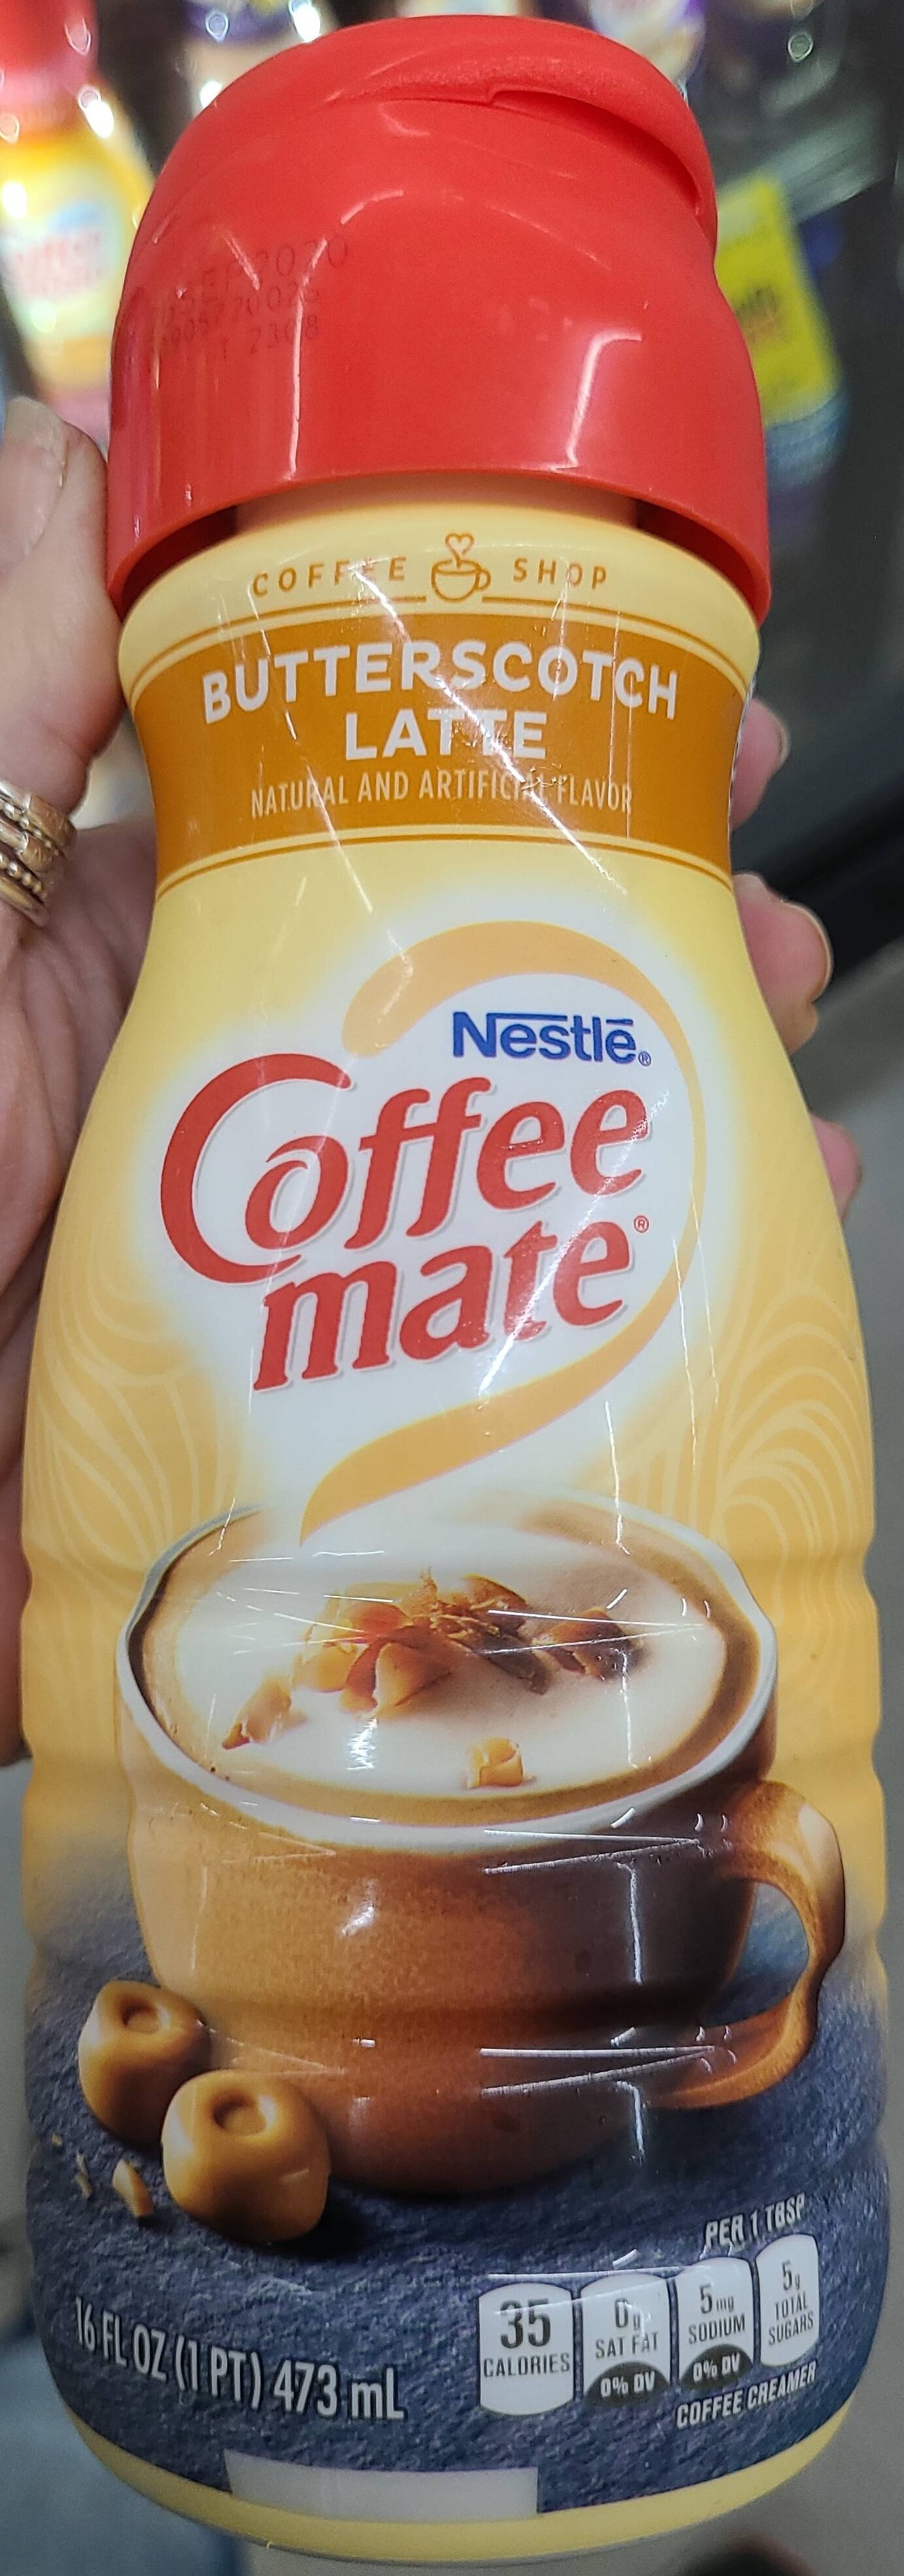 Butterscotch Latte Coffee creamer - Product